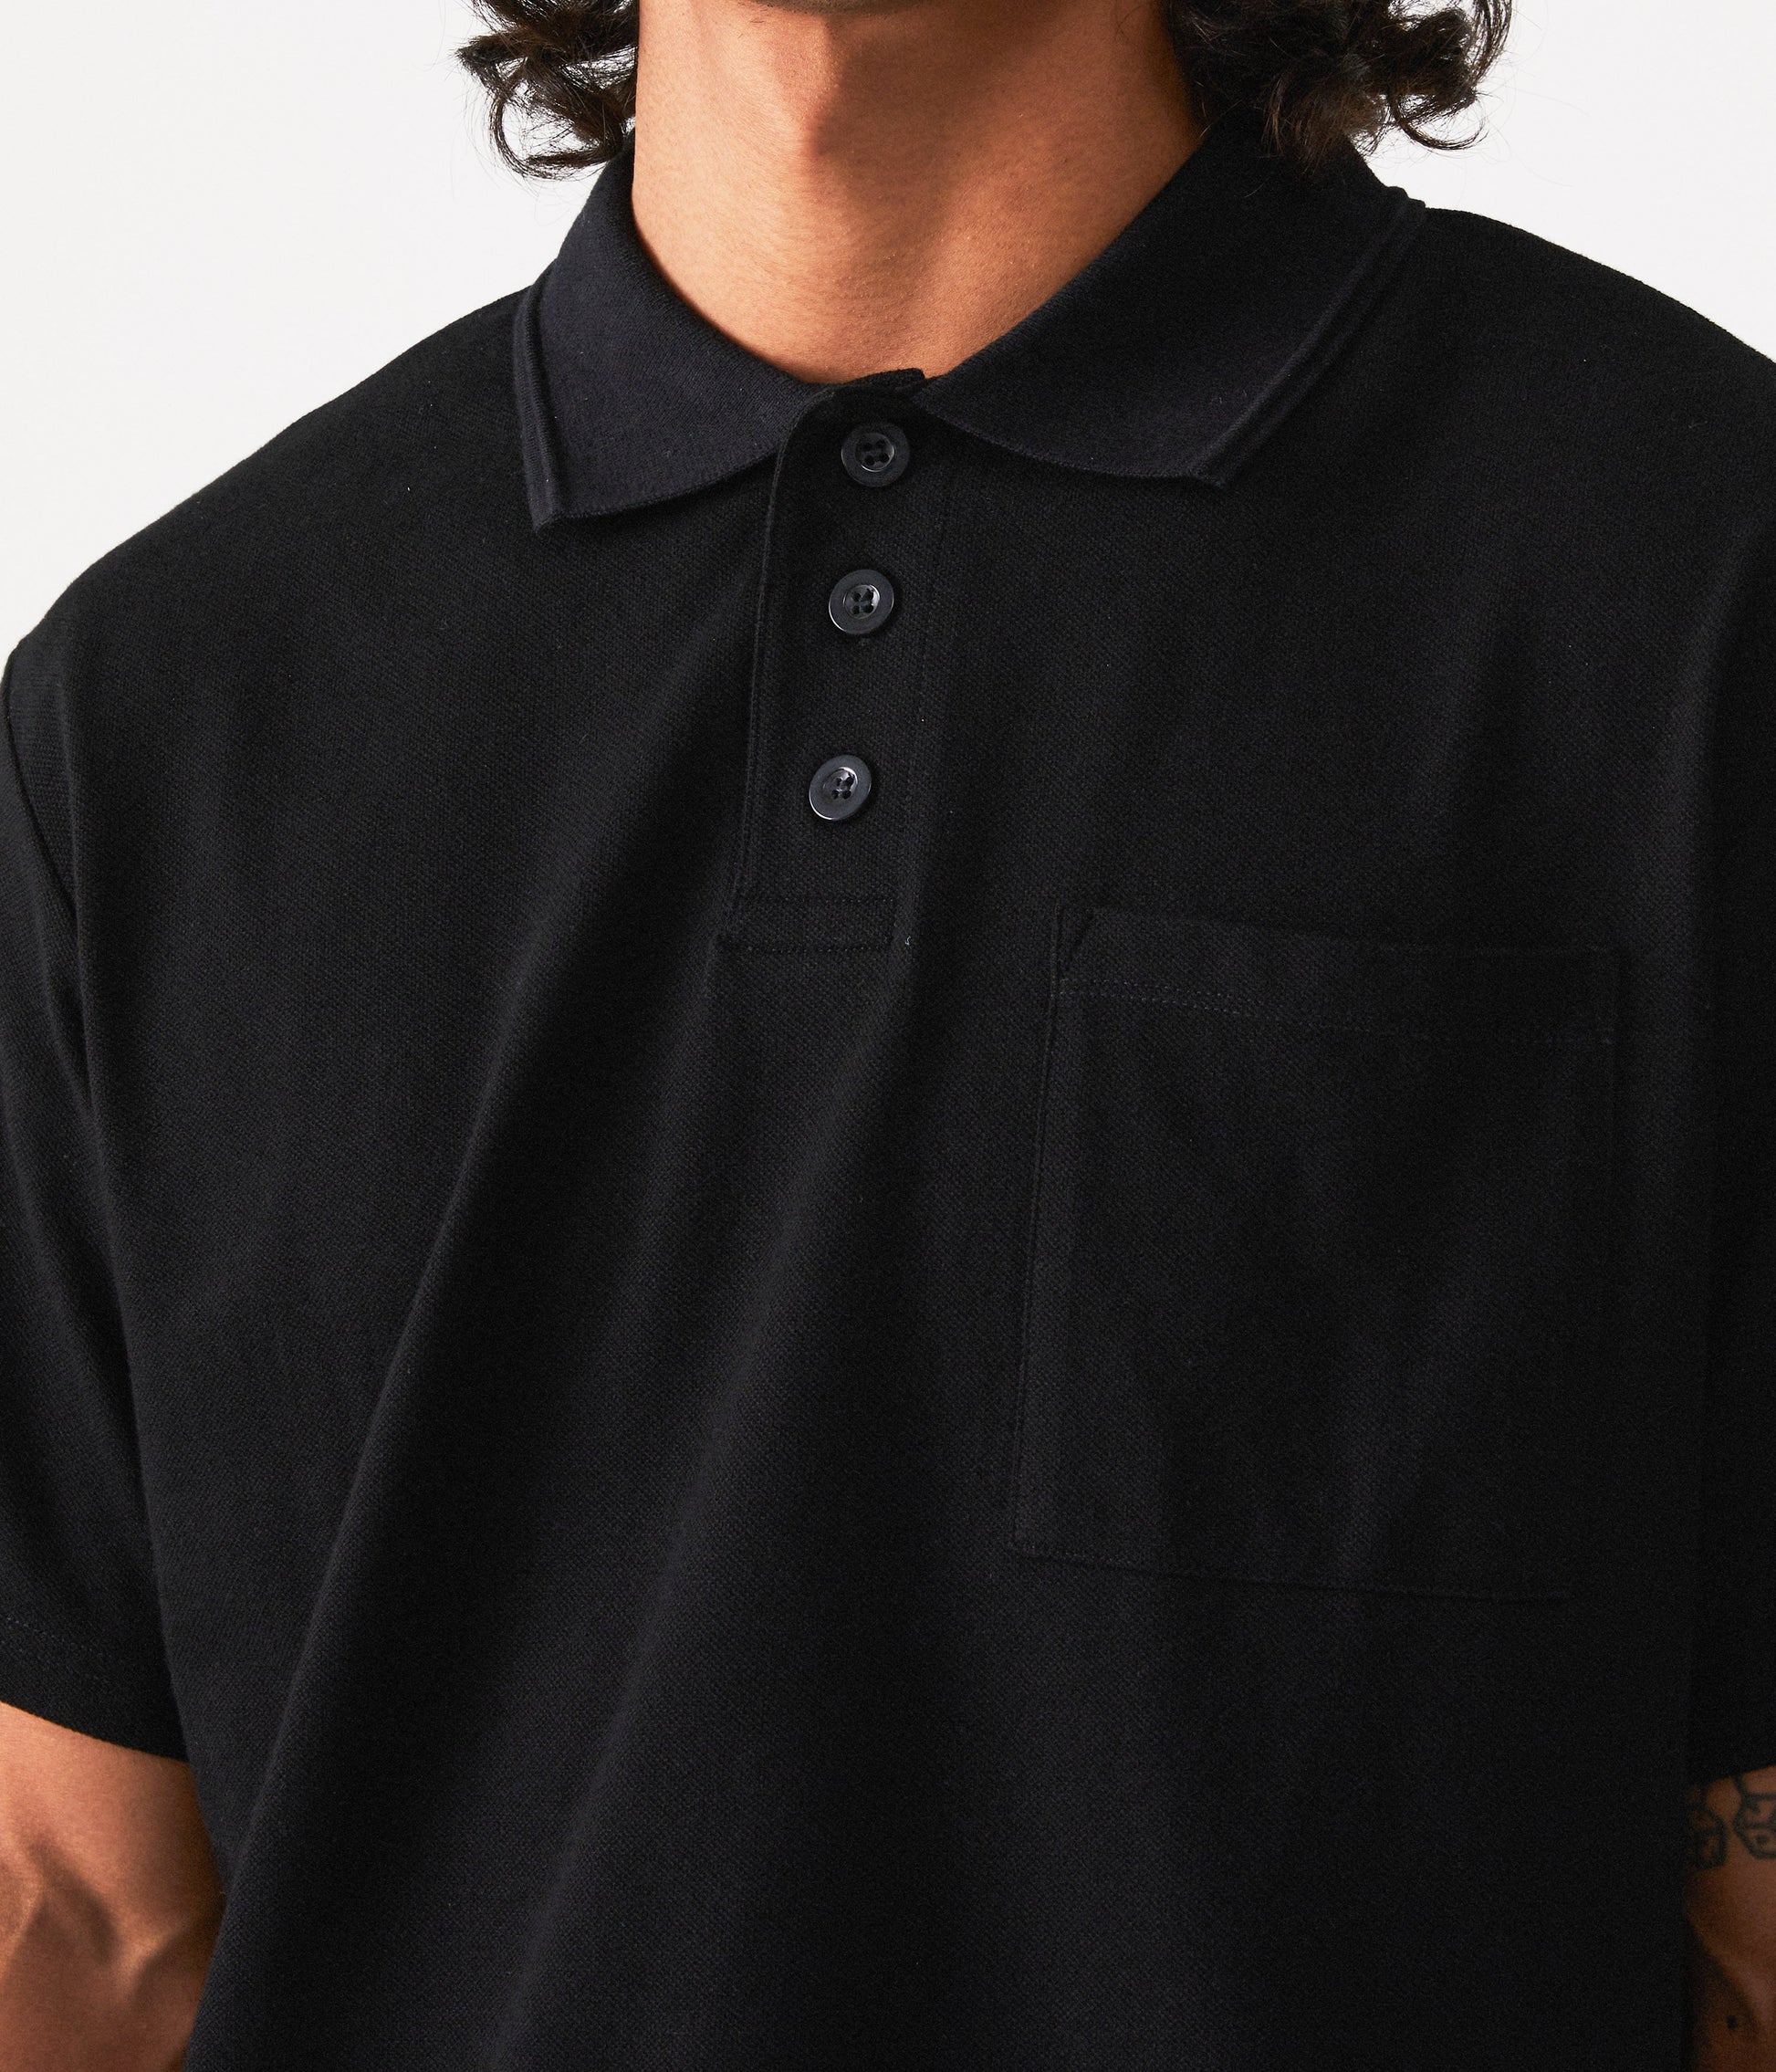 Uniform S/S Button Polo - Black